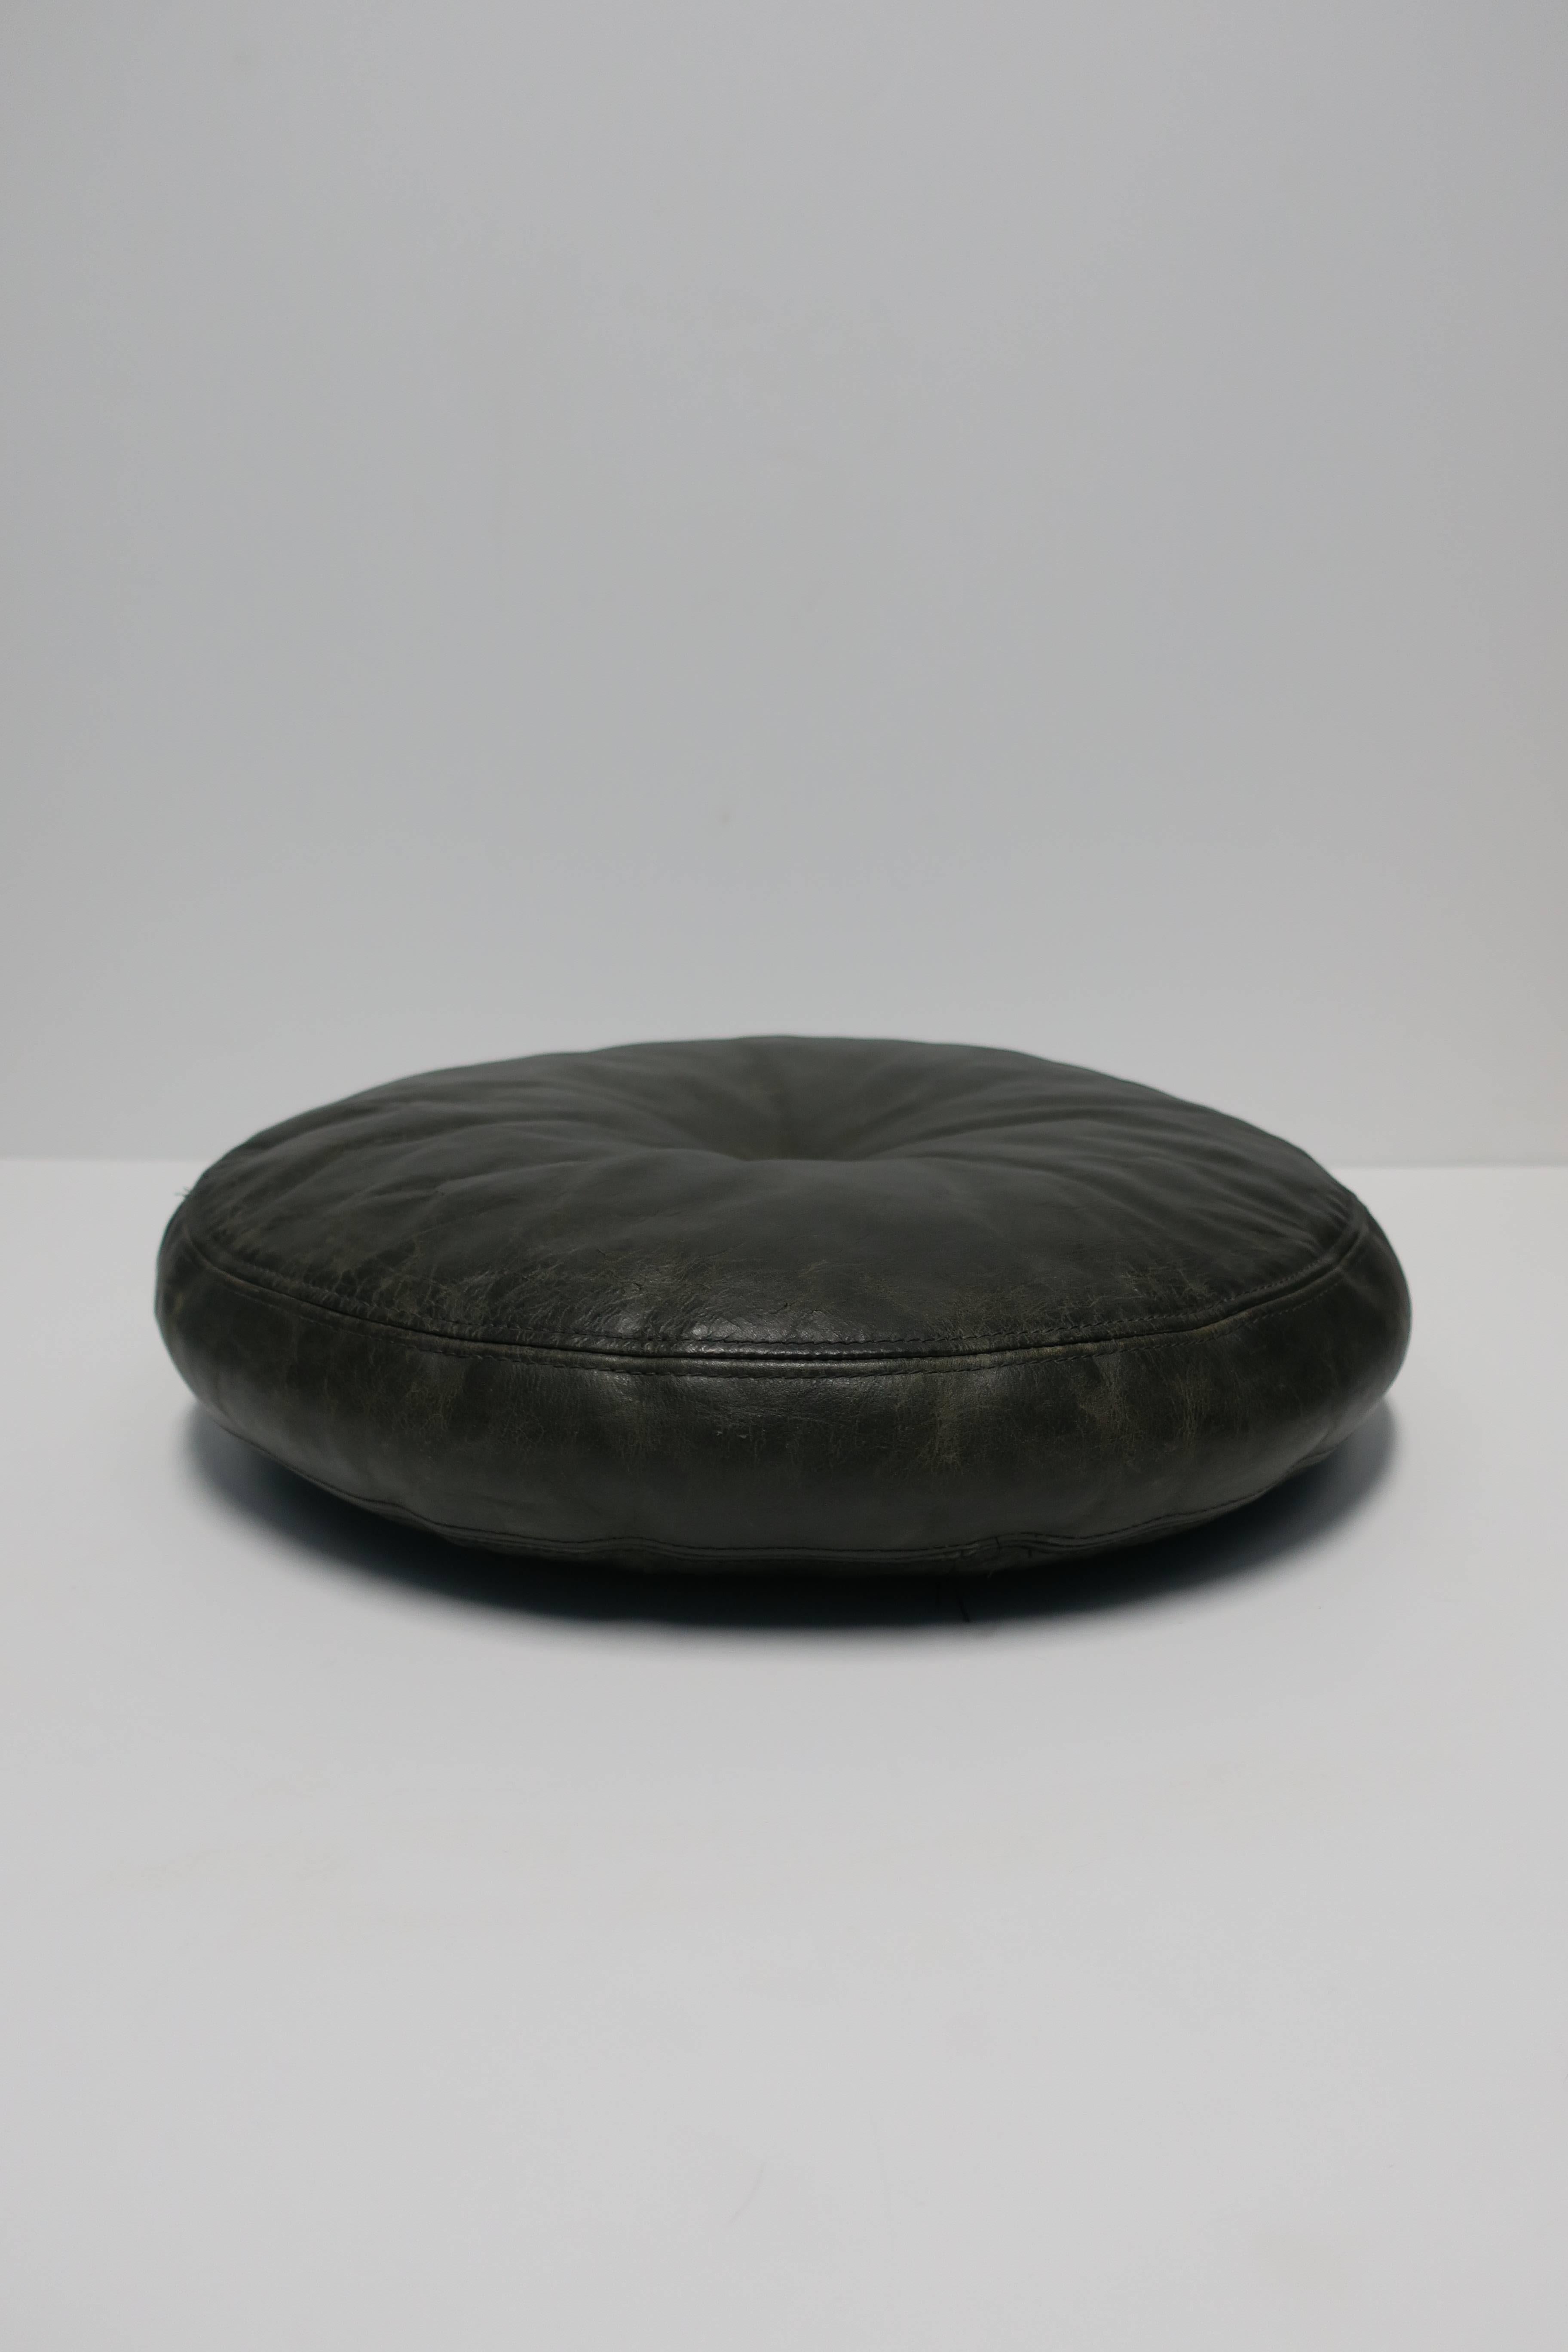 Late 20th Century Scandinavian Modern Dark Green Round Leather Pillow, circa 1970s Sweden For Sale